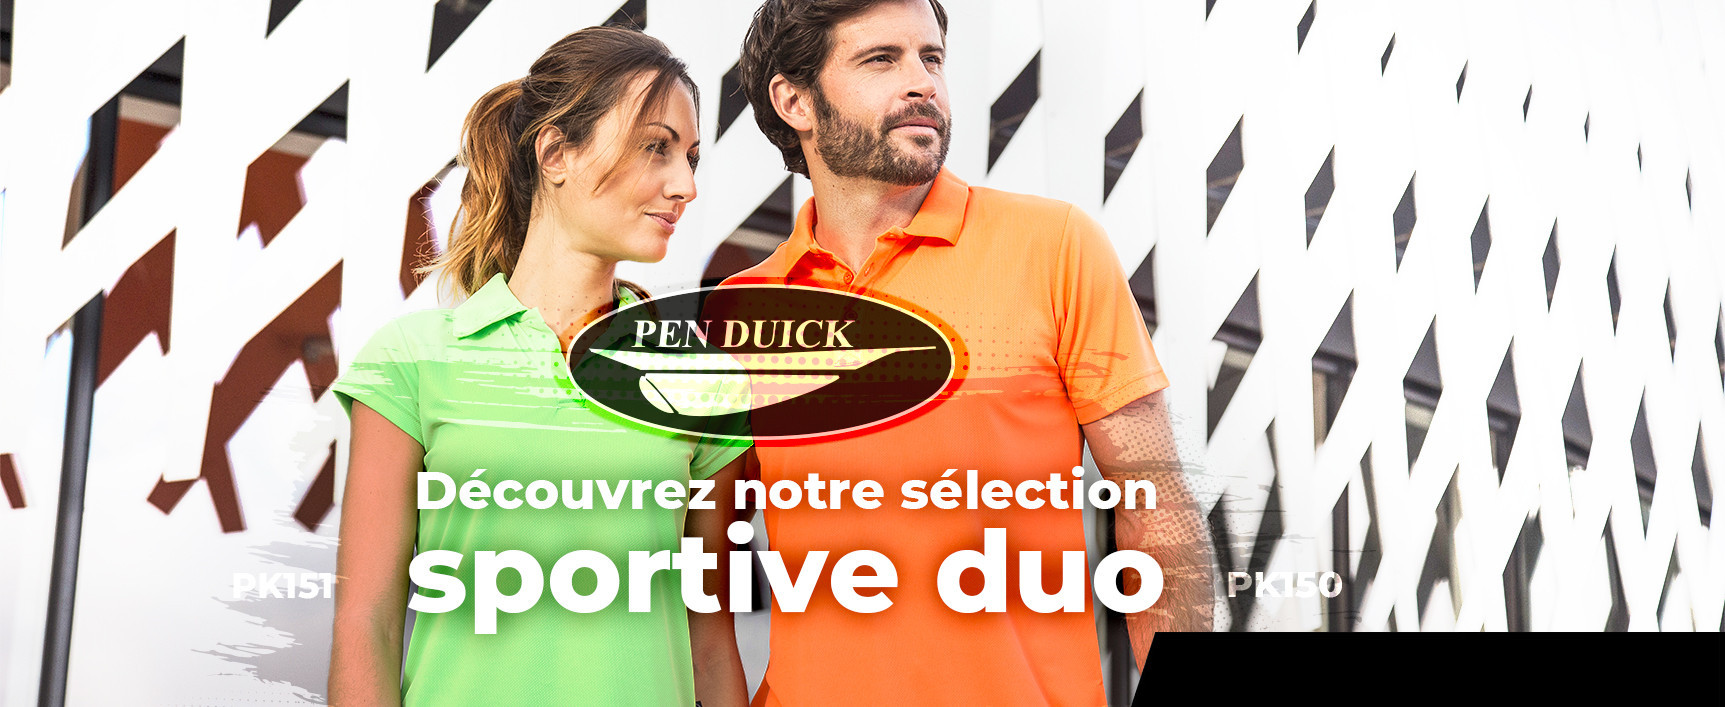 Pen Duick - Duo sport